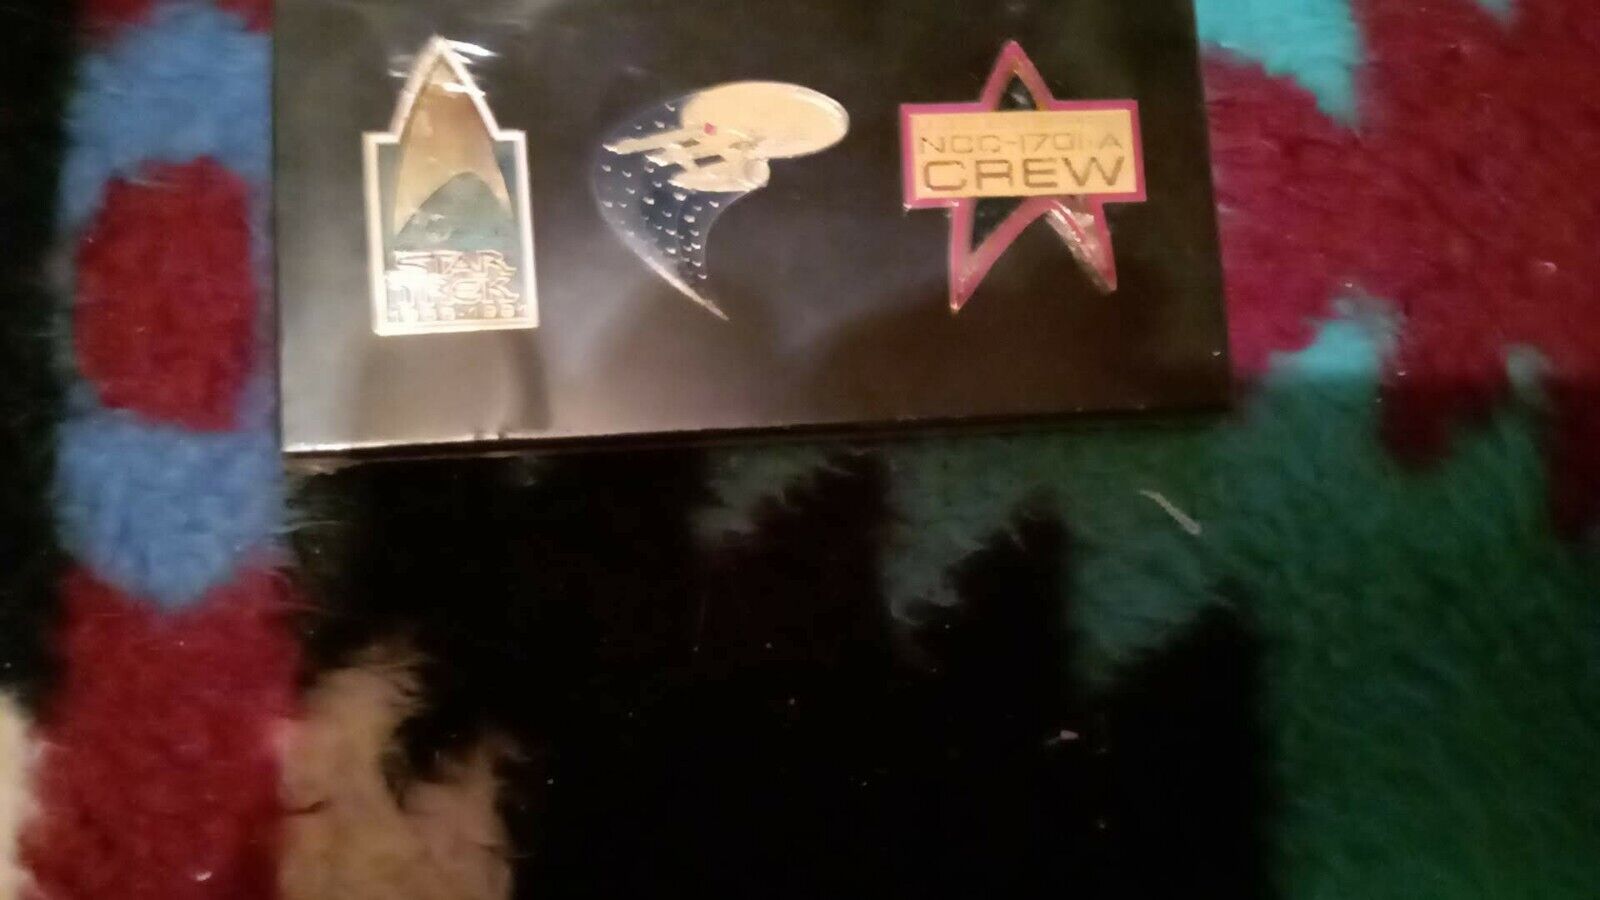 Star Trek Emblems  3 sealed approx little over inch each